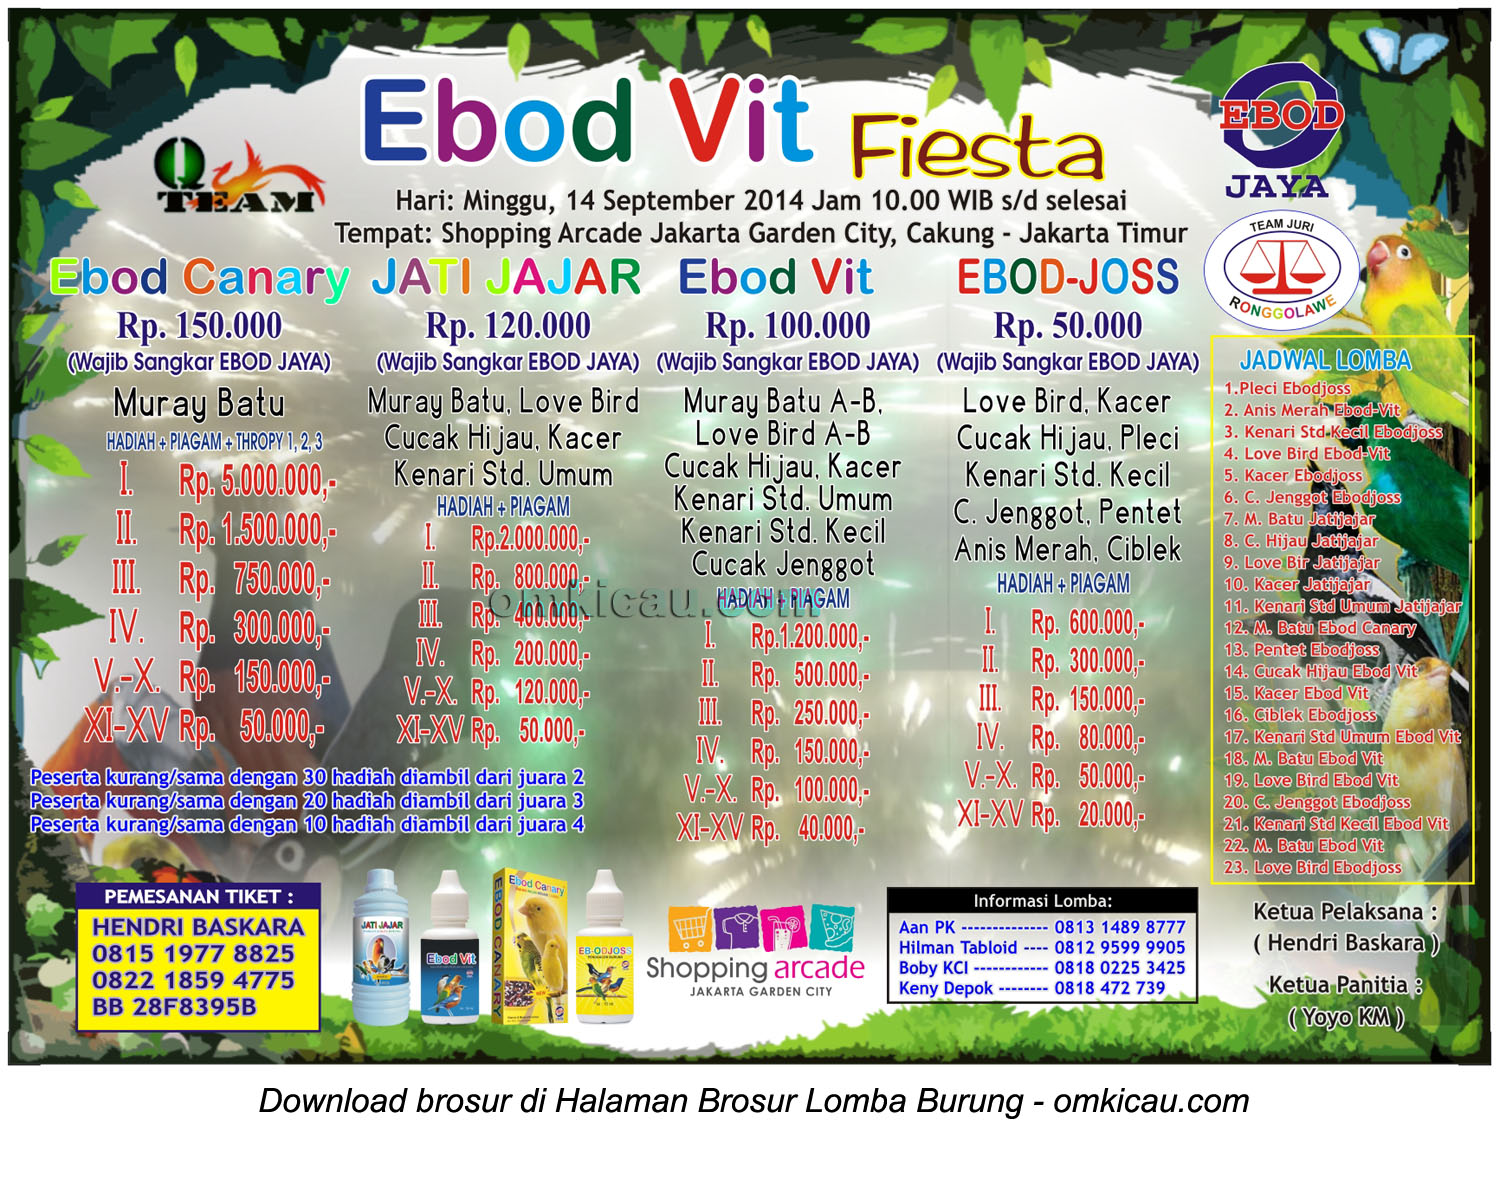 Brosur Lomba Burung Berkicau Ebod Vit Fiesta, Jakarta Timur, 14 September 2014